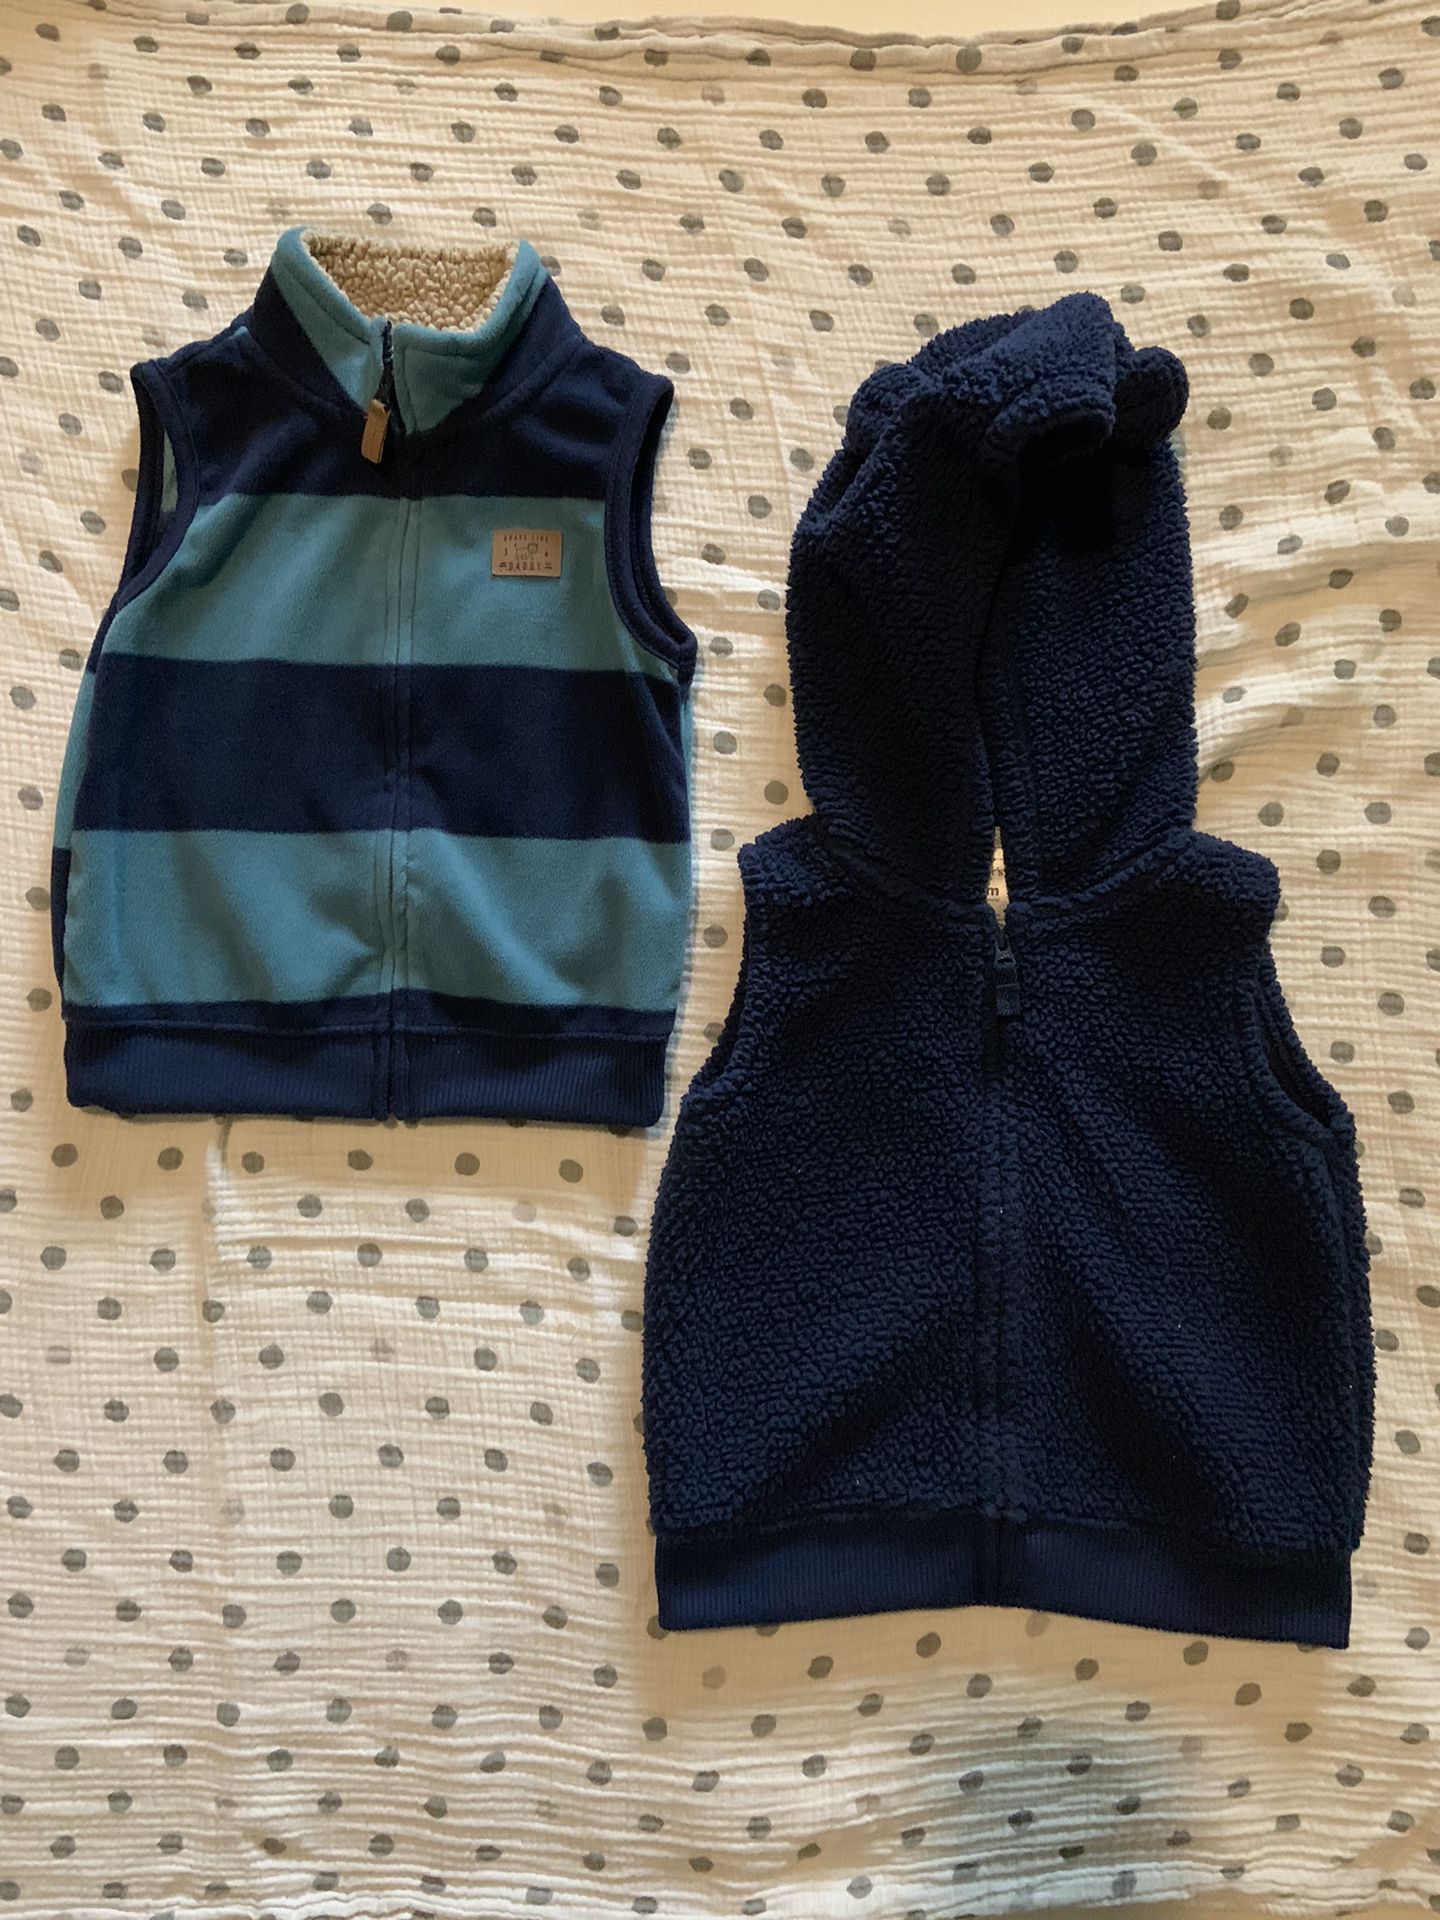 Warm & Cozy Toddler Sweater Vest 24 Months Carter’s 